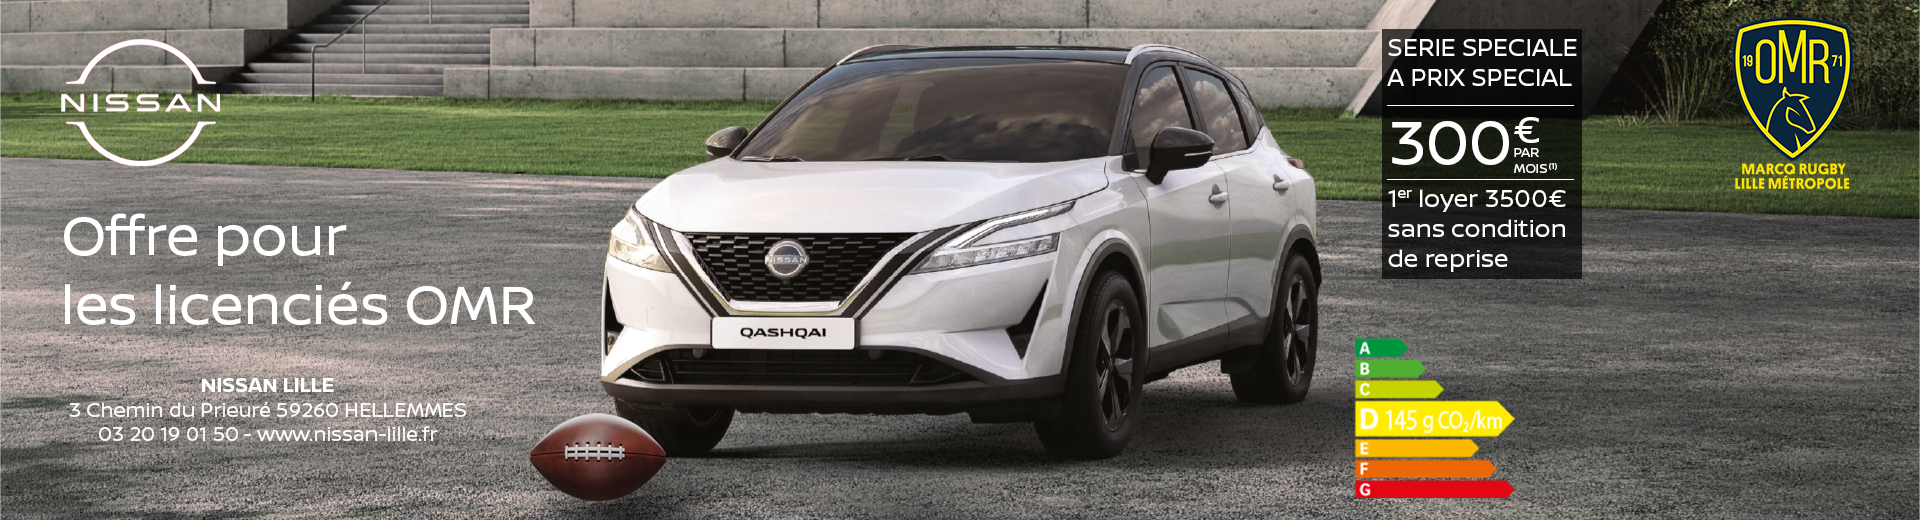 Nissan Qashqai - Offre licenciés OMR - NISSAN LILLE